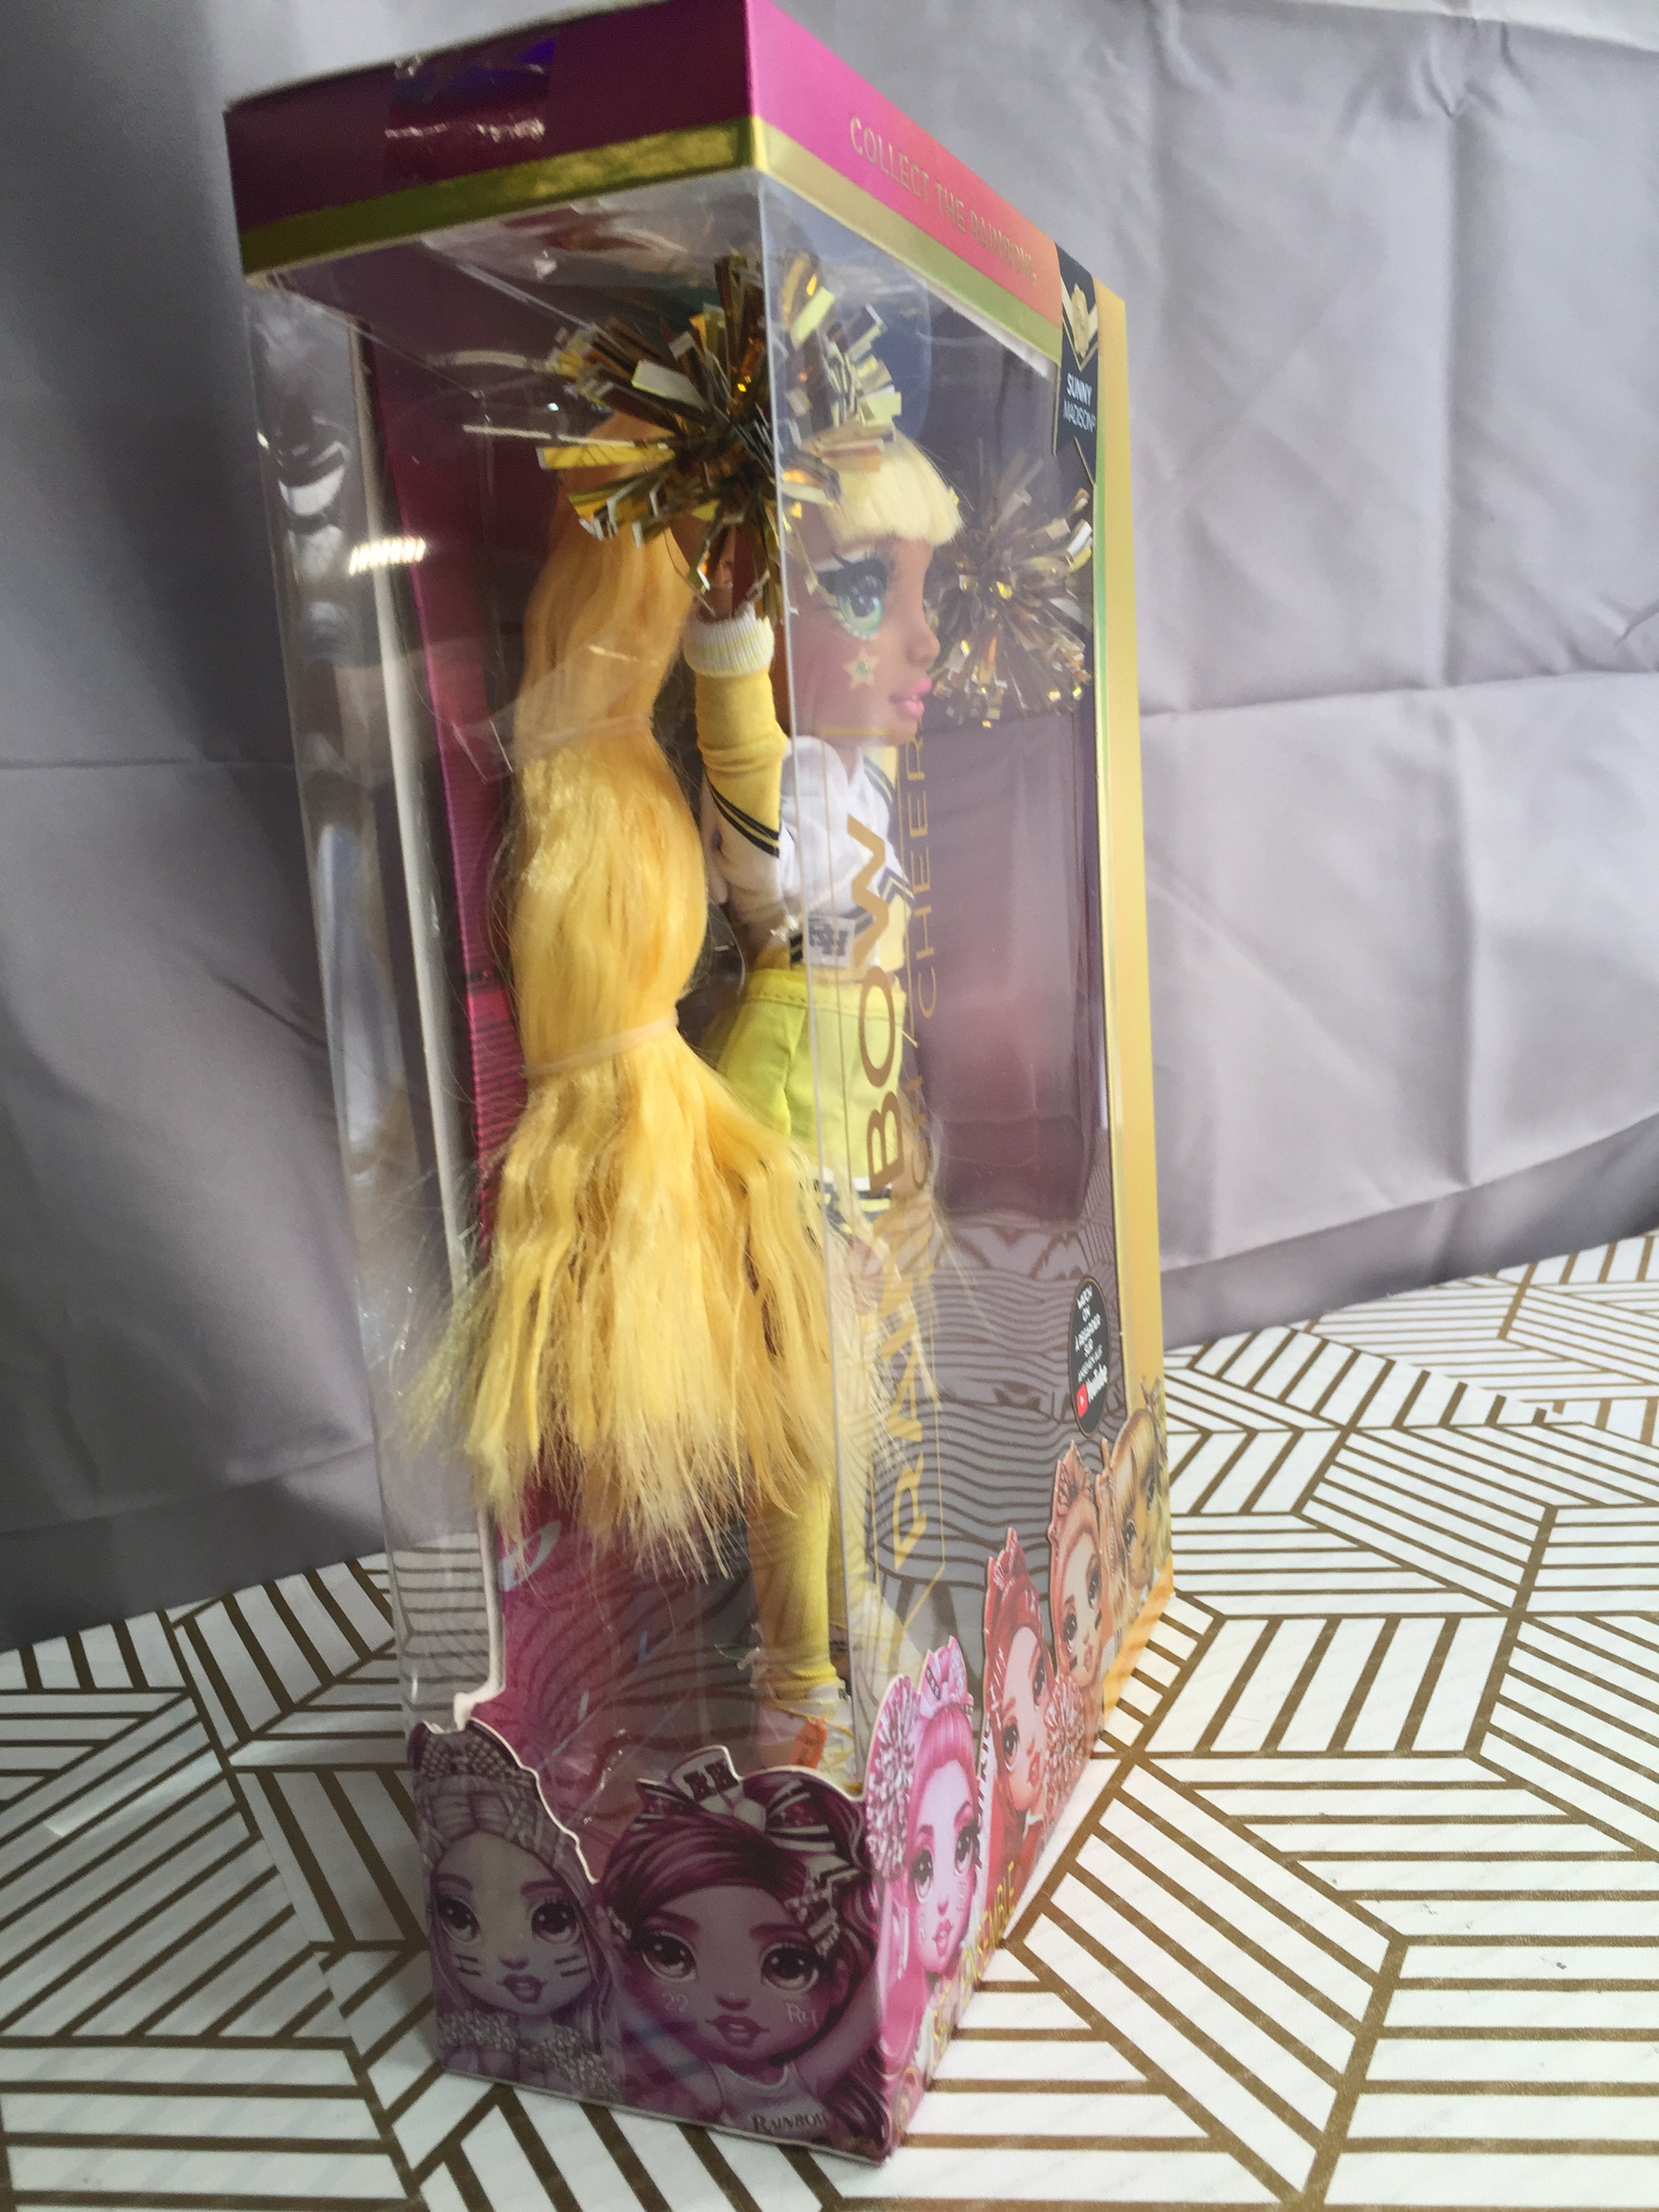 Rainbow High Cheer Sunny Madison – Yellow Cheerleader Fashion Doll with Pom Poms (8041566699758)